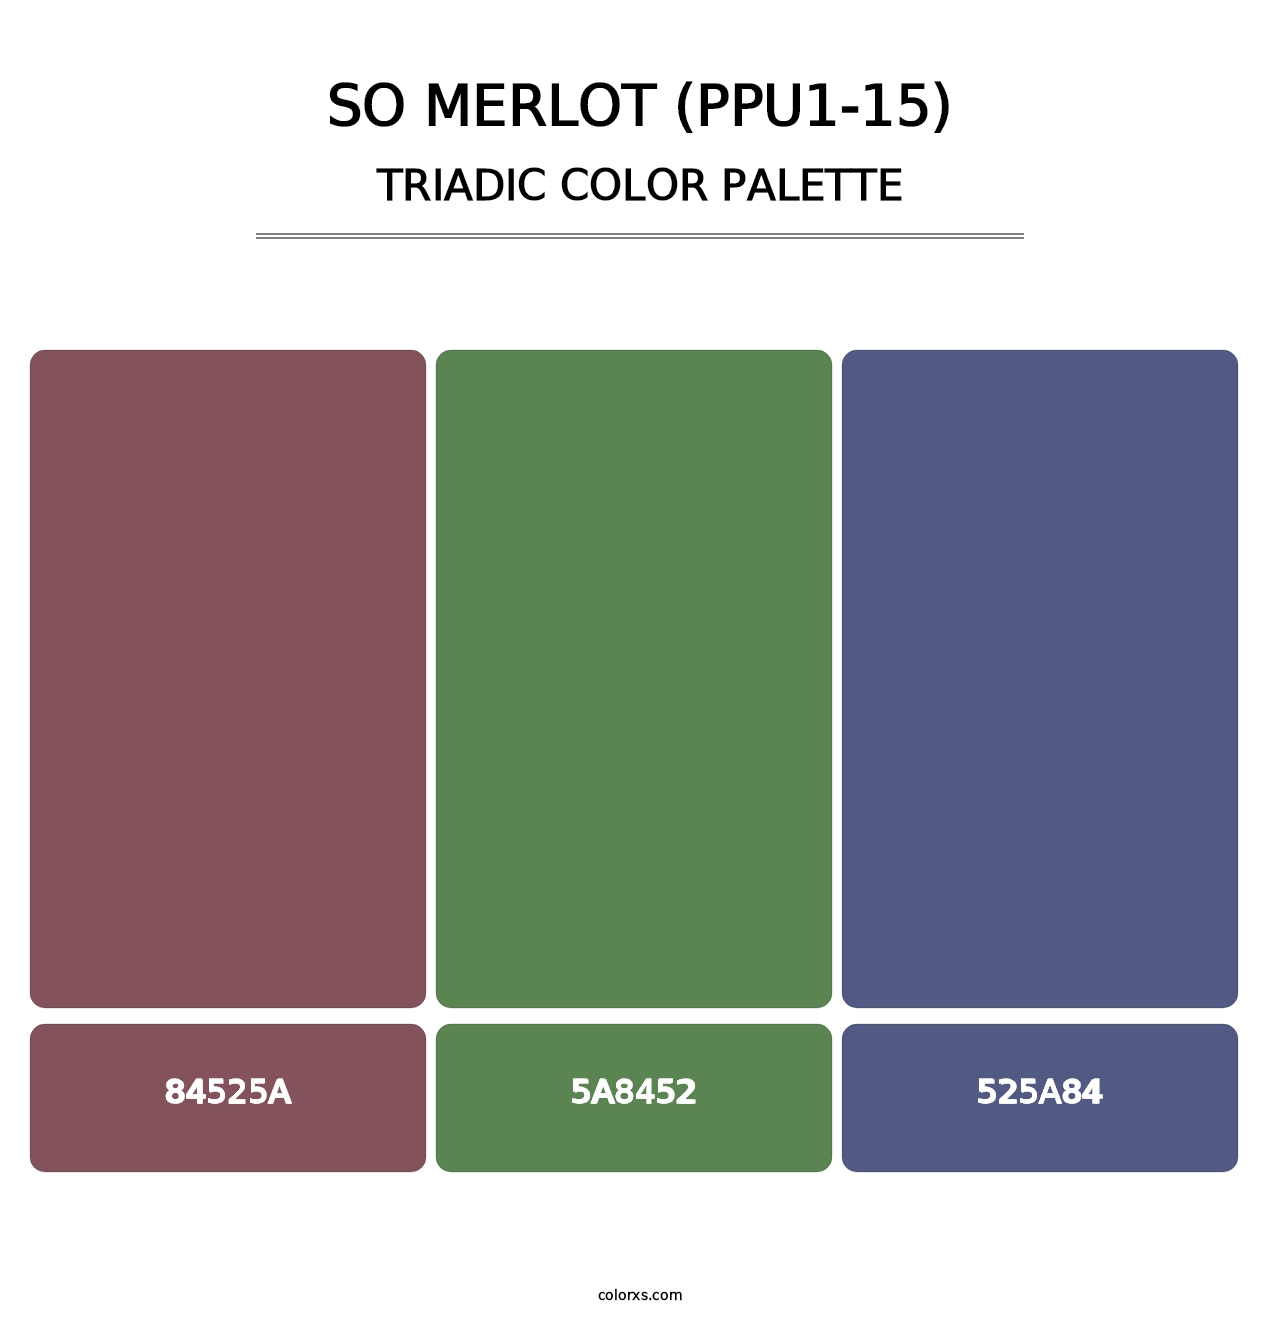 So Merlot (PPU1-15) - Triadic Color Palette